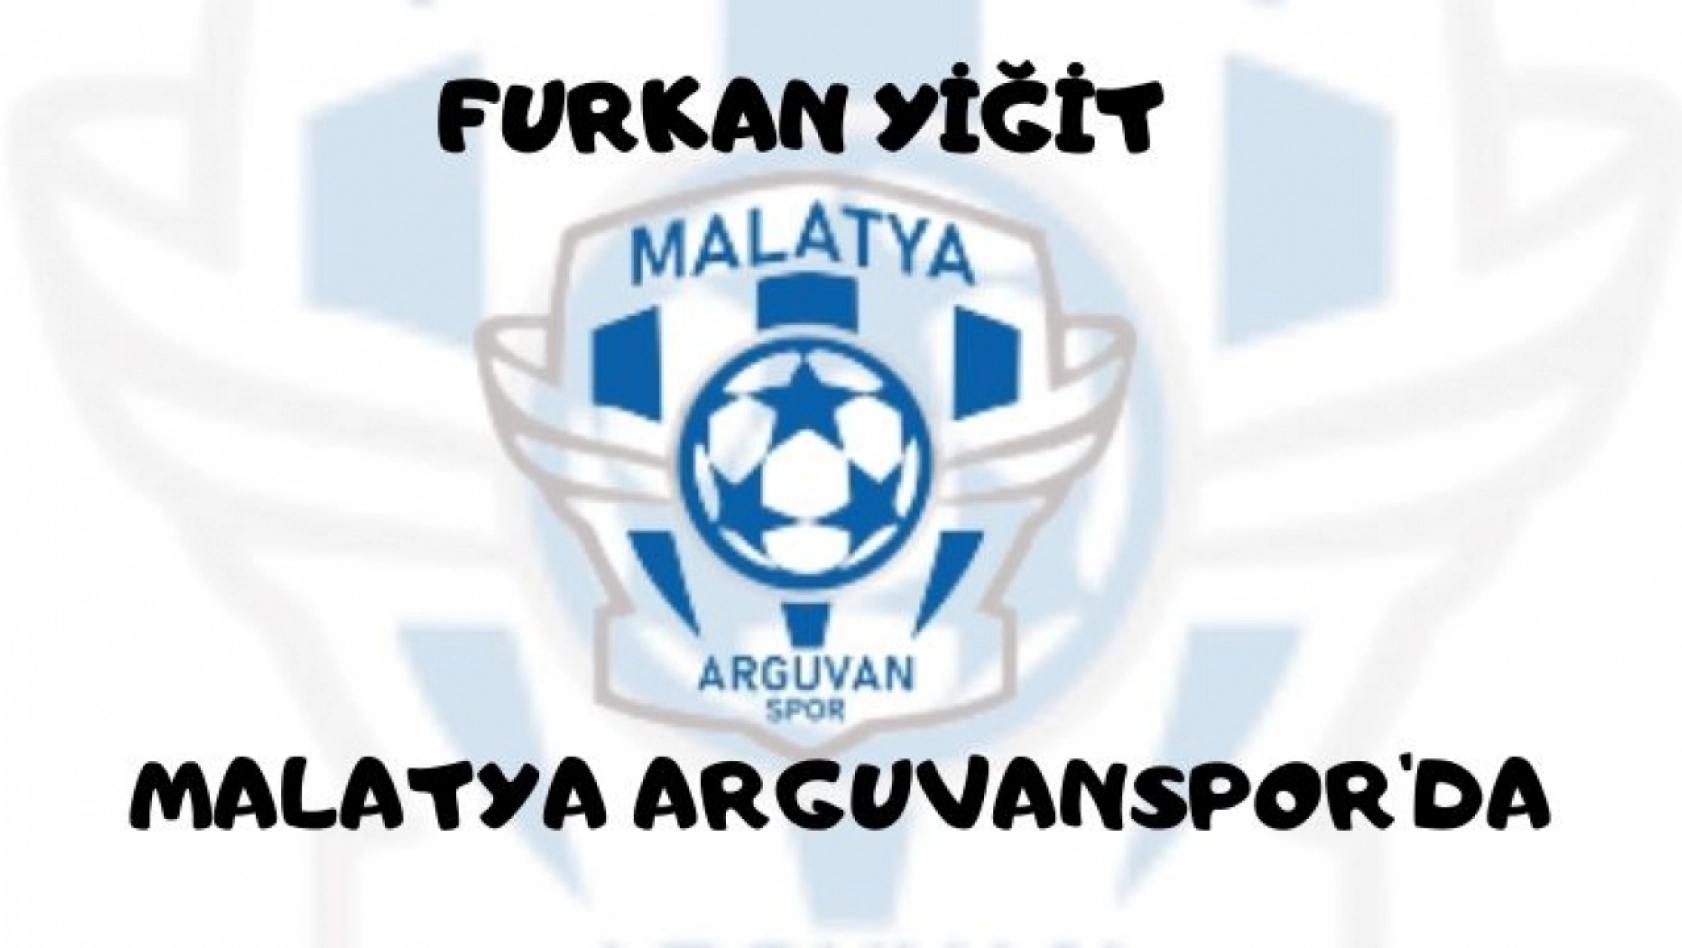 Furkan Yiğit Malatya Arguvanspor'la Analaştı